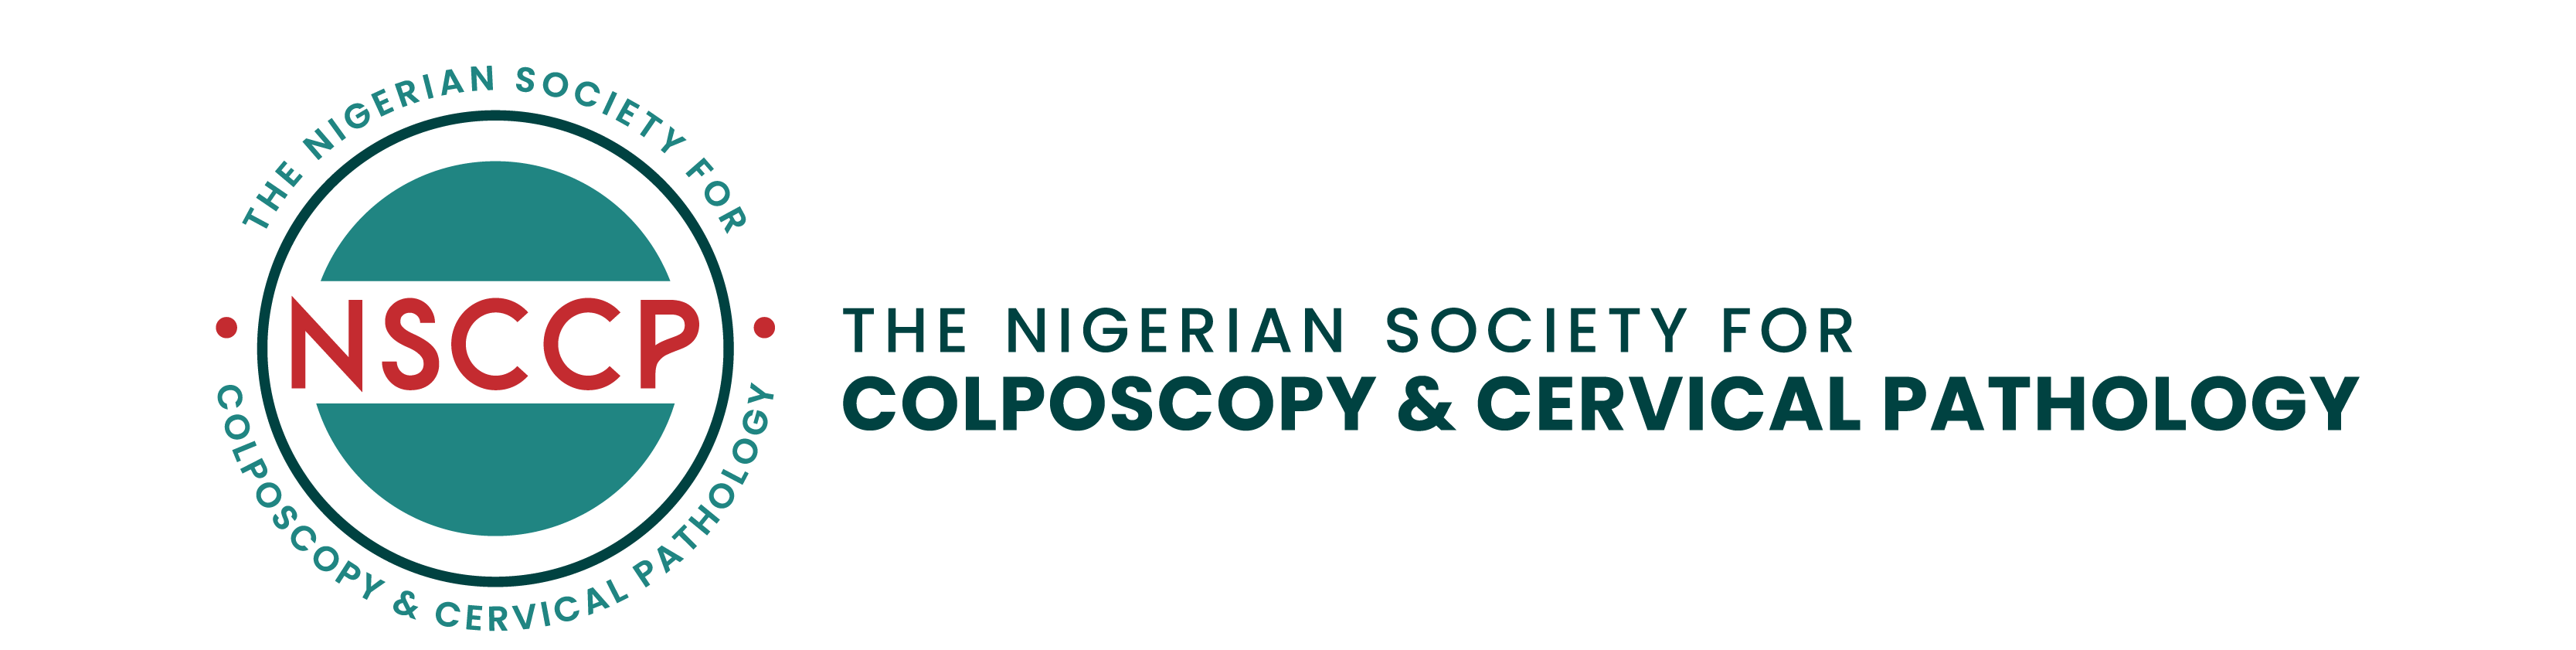 The Nigerian Society for Colposcopy & Cervical Pathology Logo